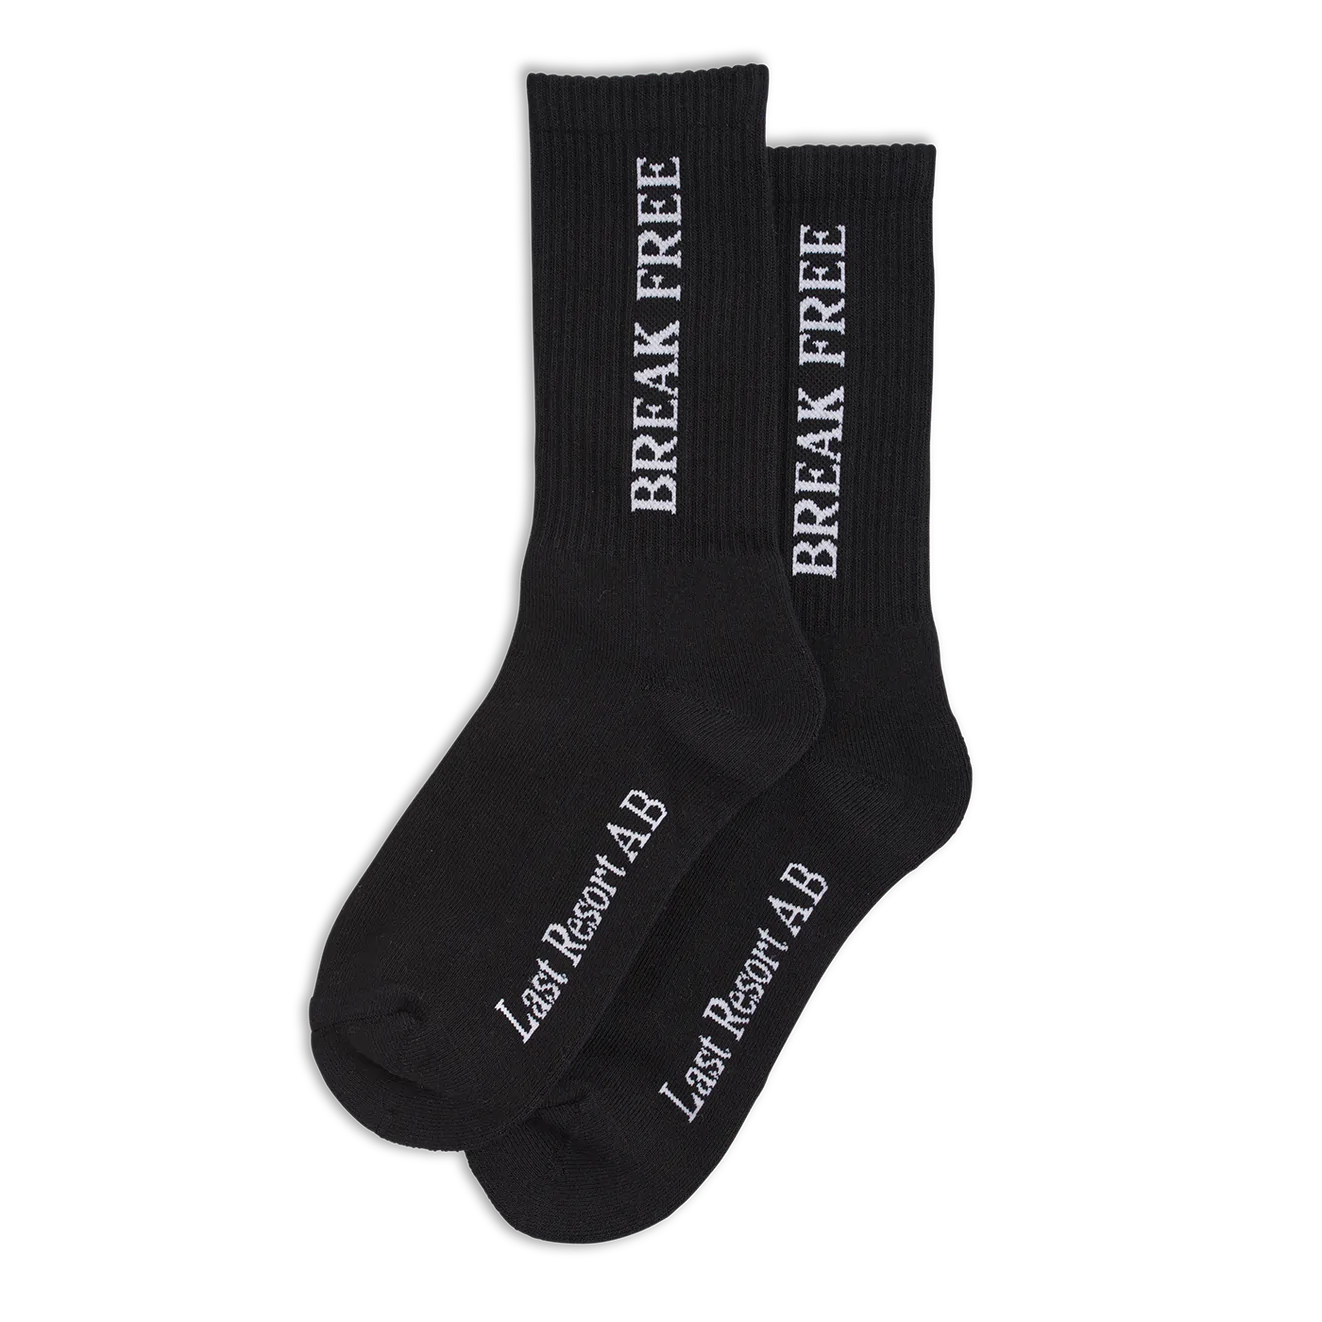 Last Resort AB - Break Free Socks - Black (3 Pack)